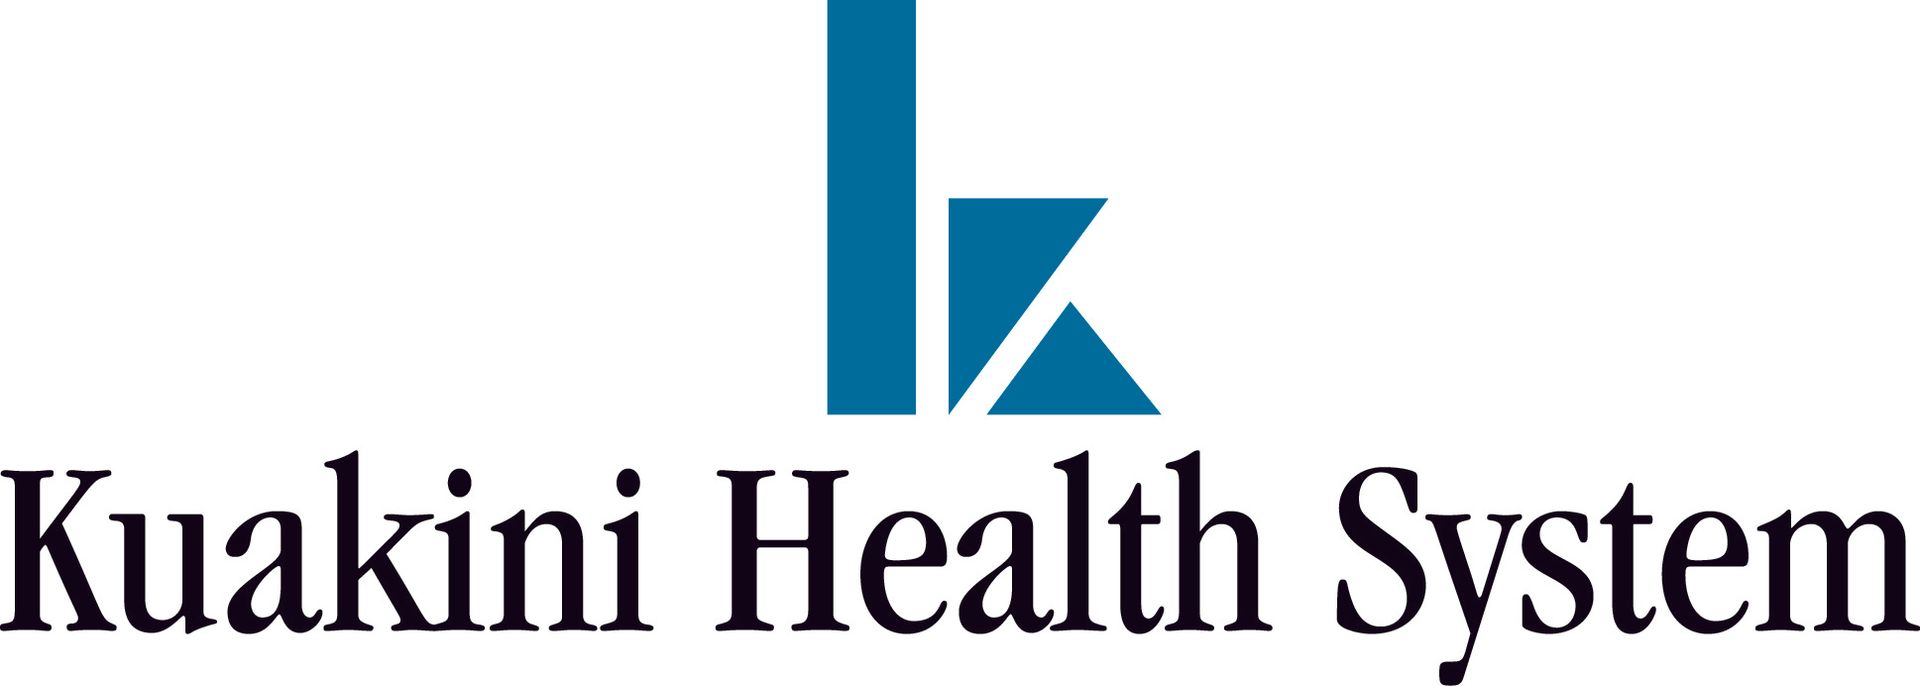 Kuakini health system